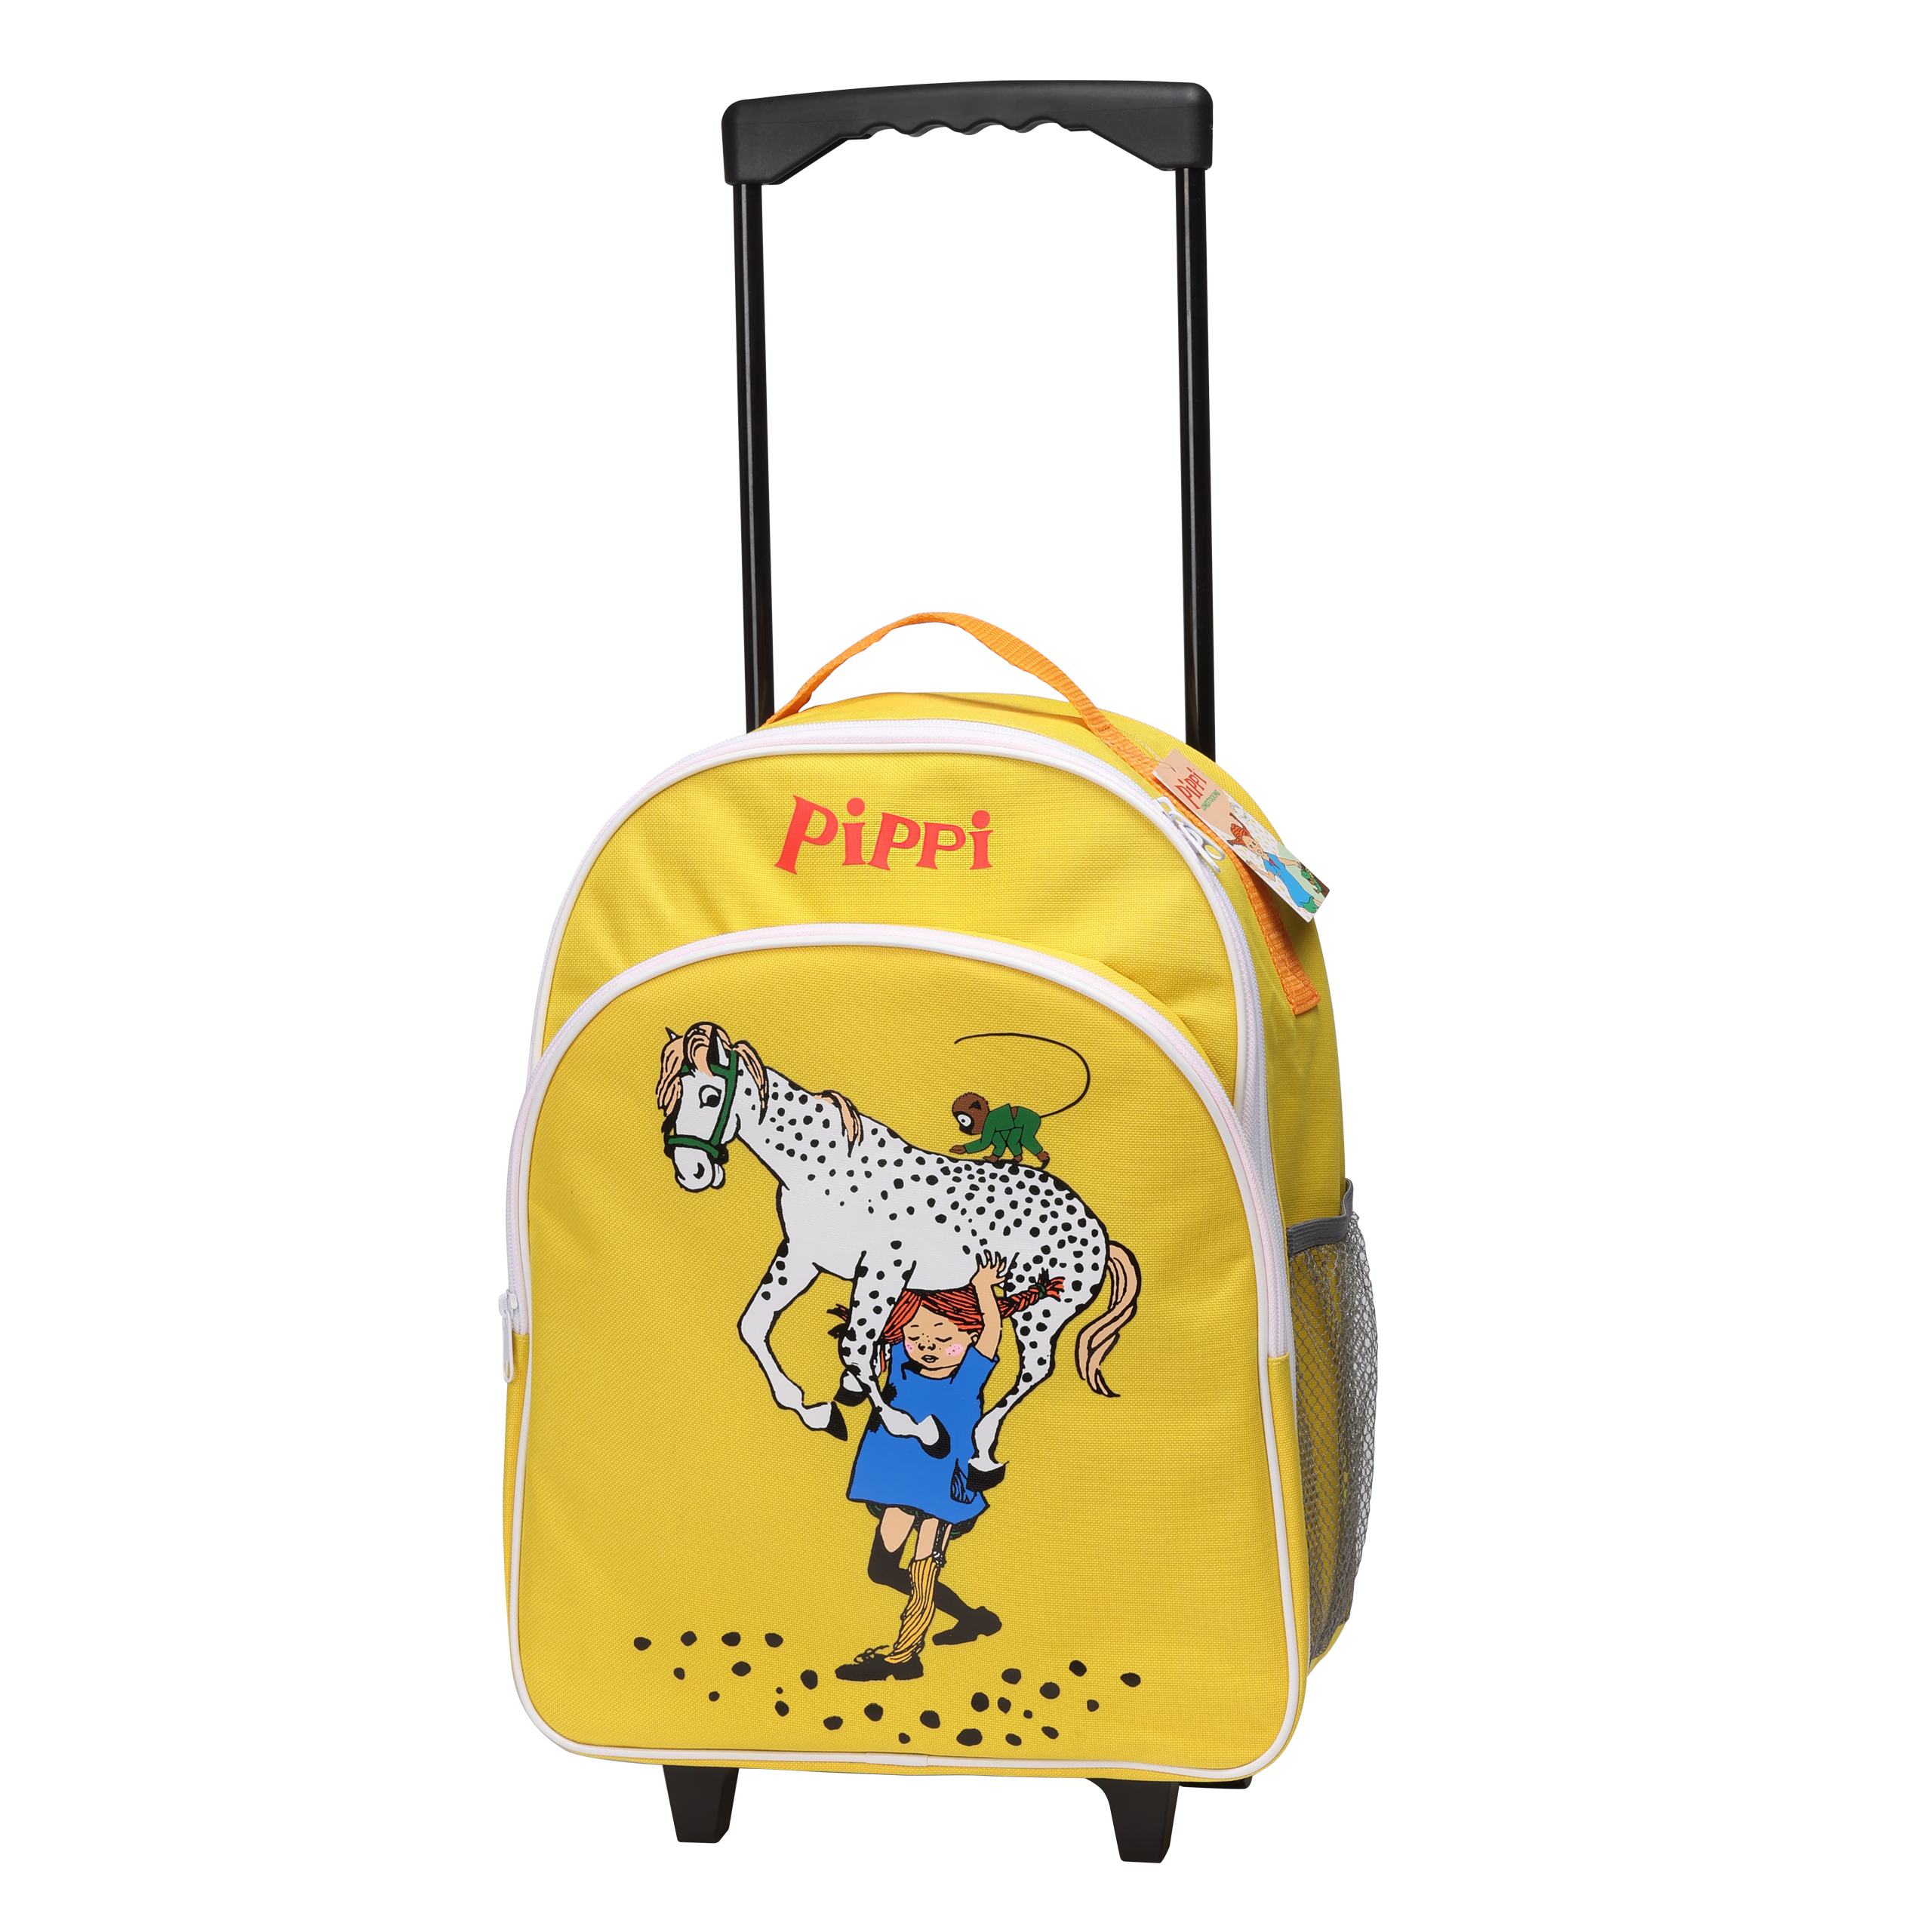 Kids bags pippi kids bag travel bag yellow